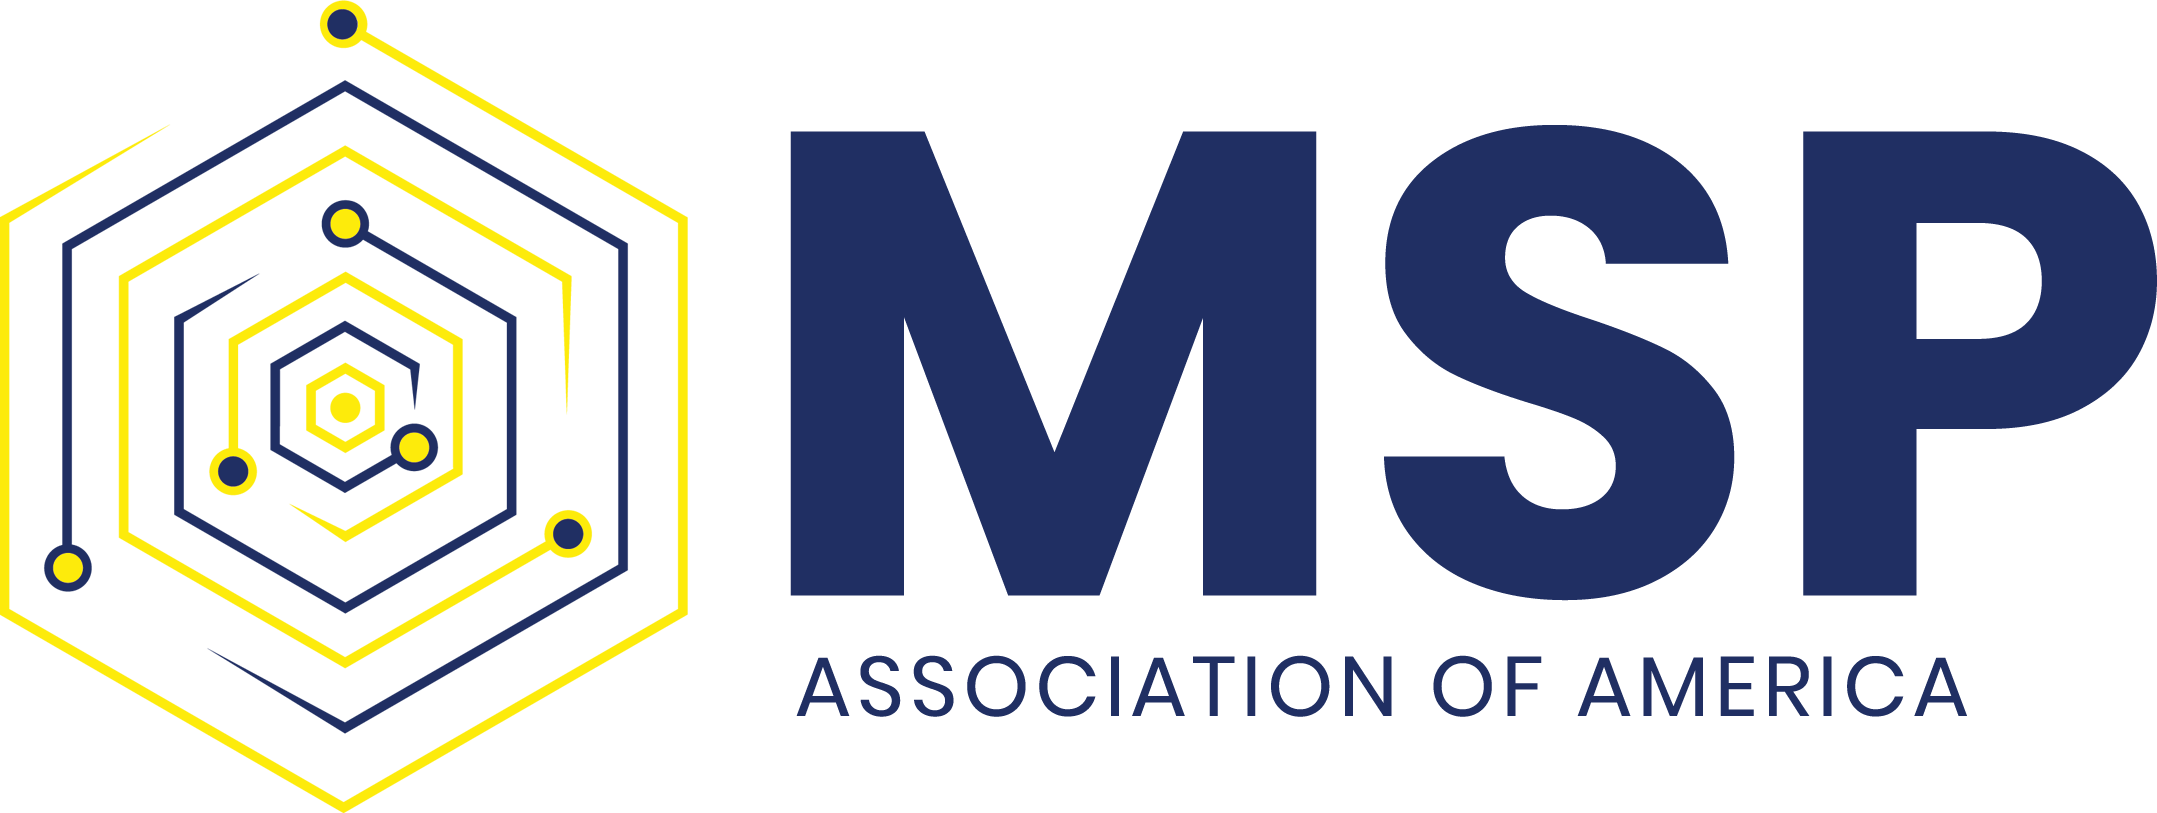 MSP Benefits for Members | MSP Association of America